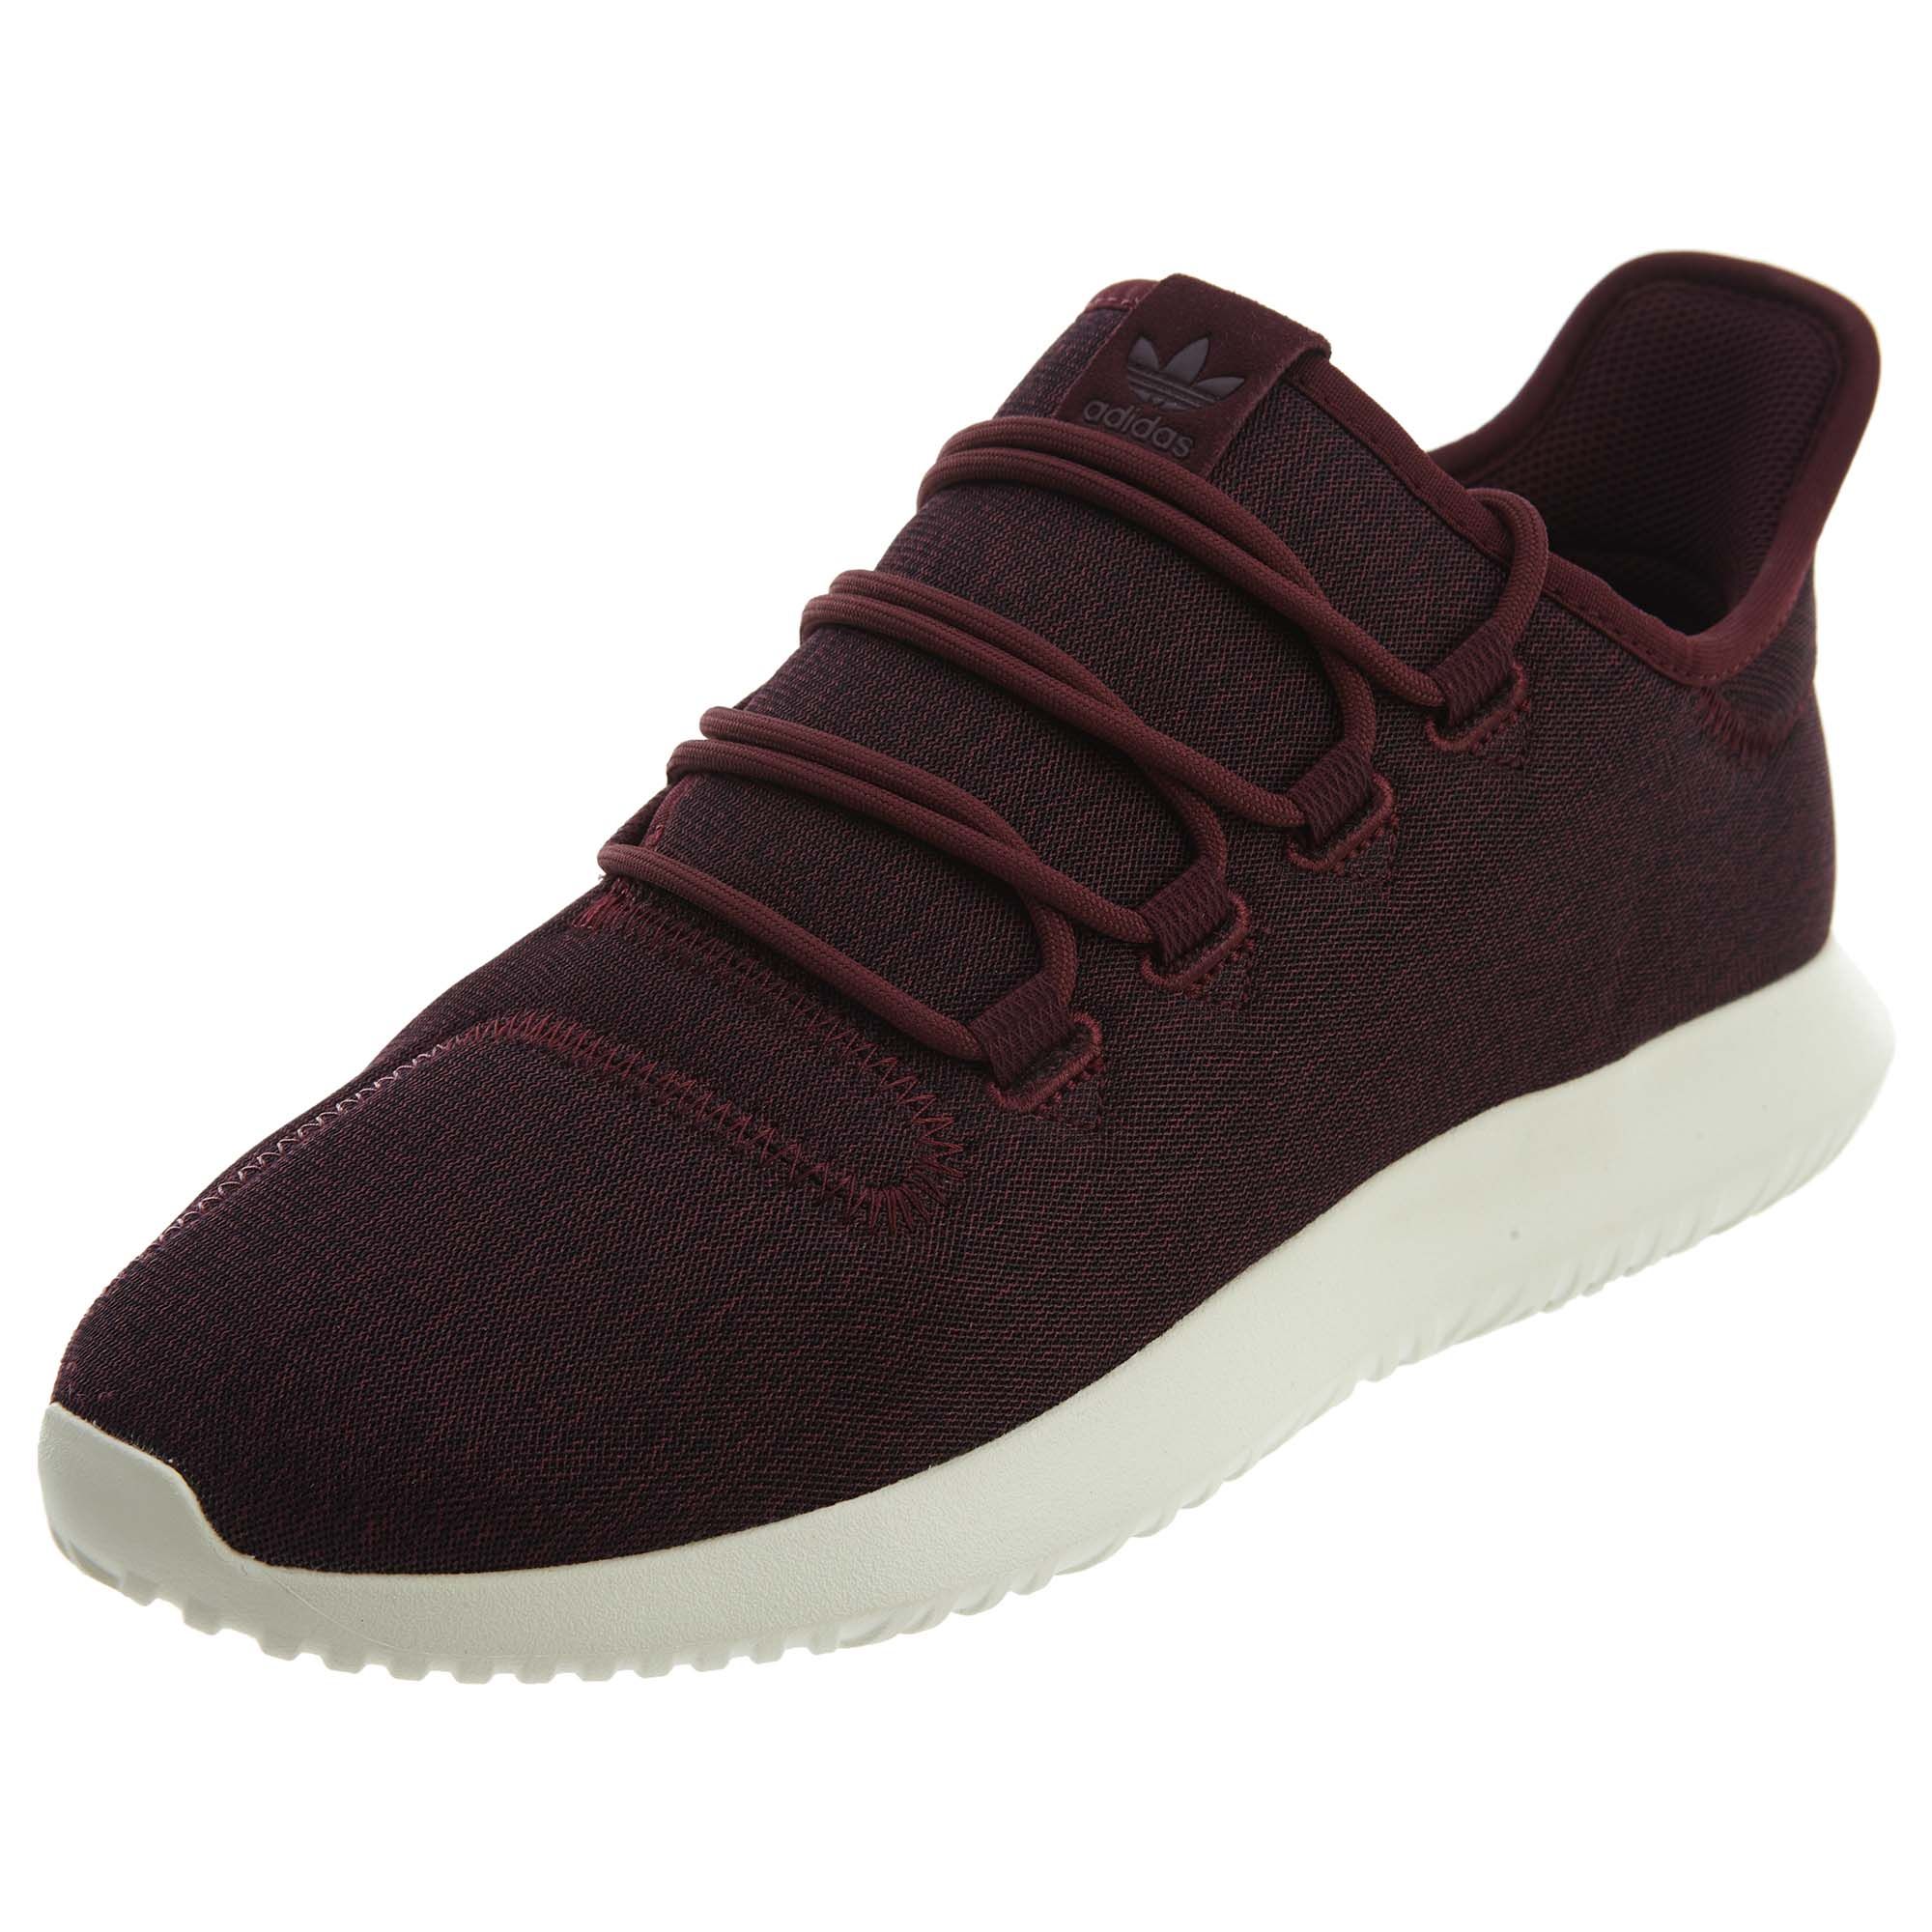 Adidas Tubular shadow maroon tennis shoes Womens Style :CQ2461